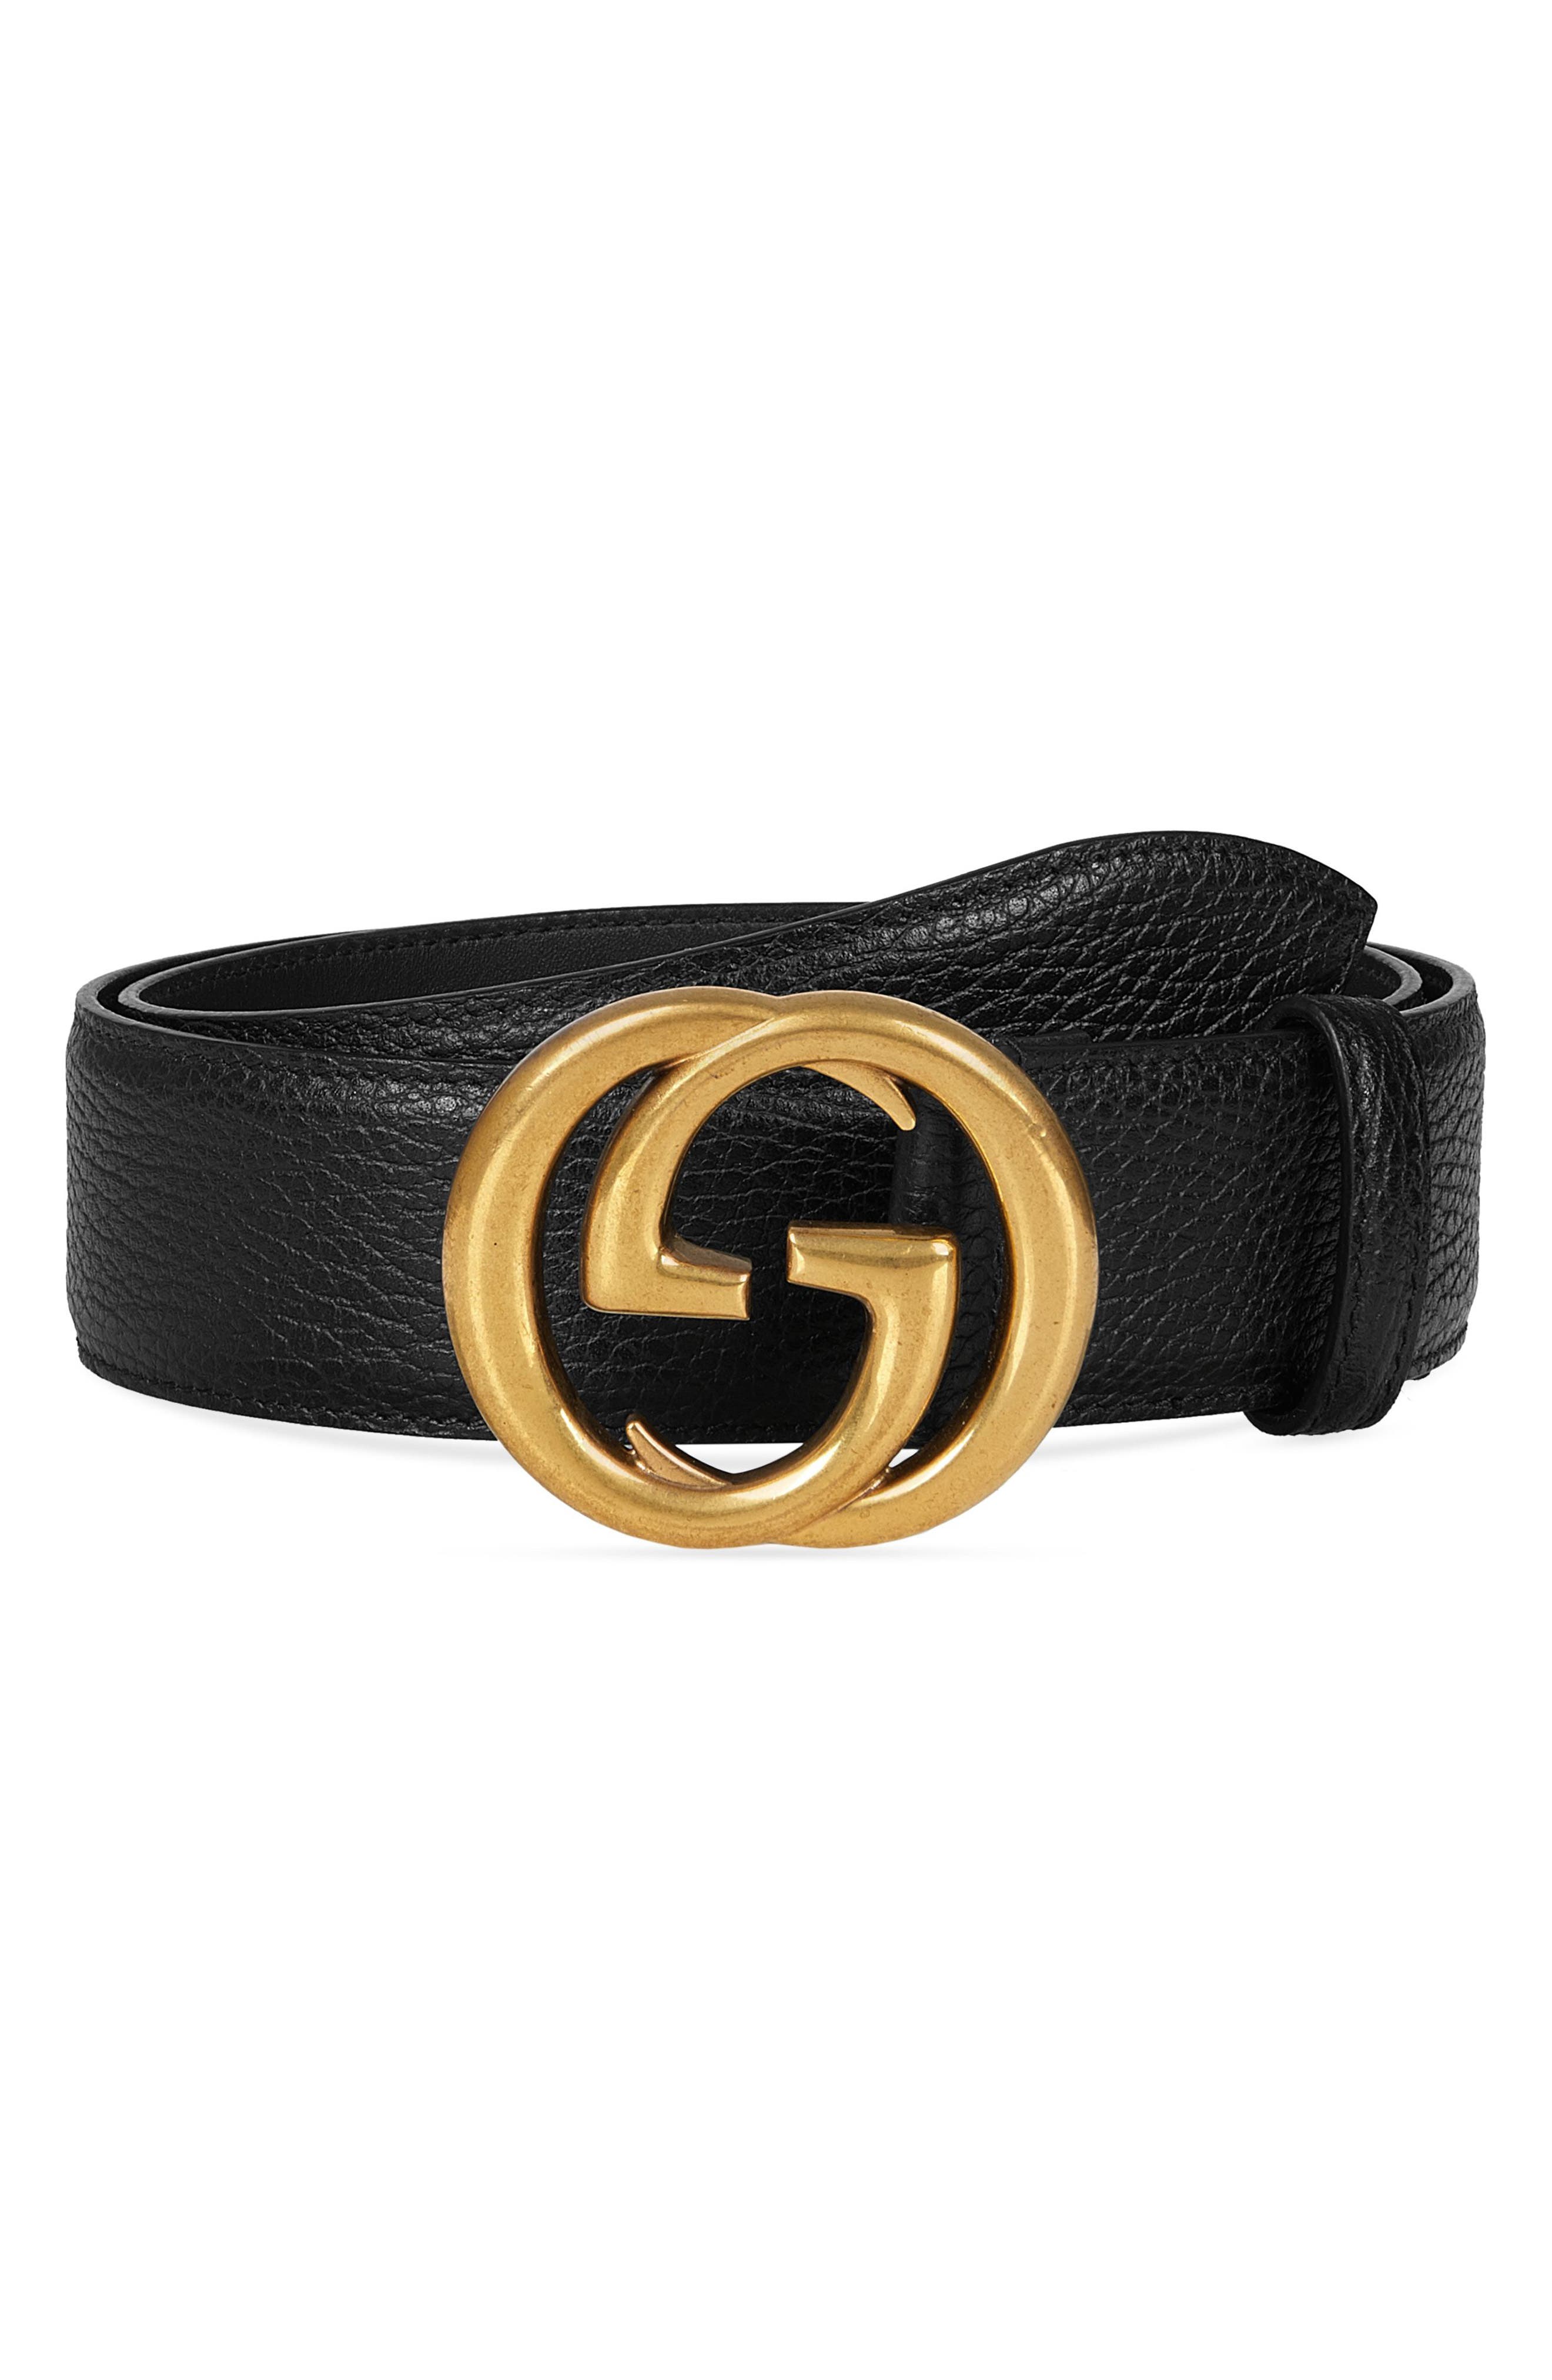 black and gold gucci belt womens